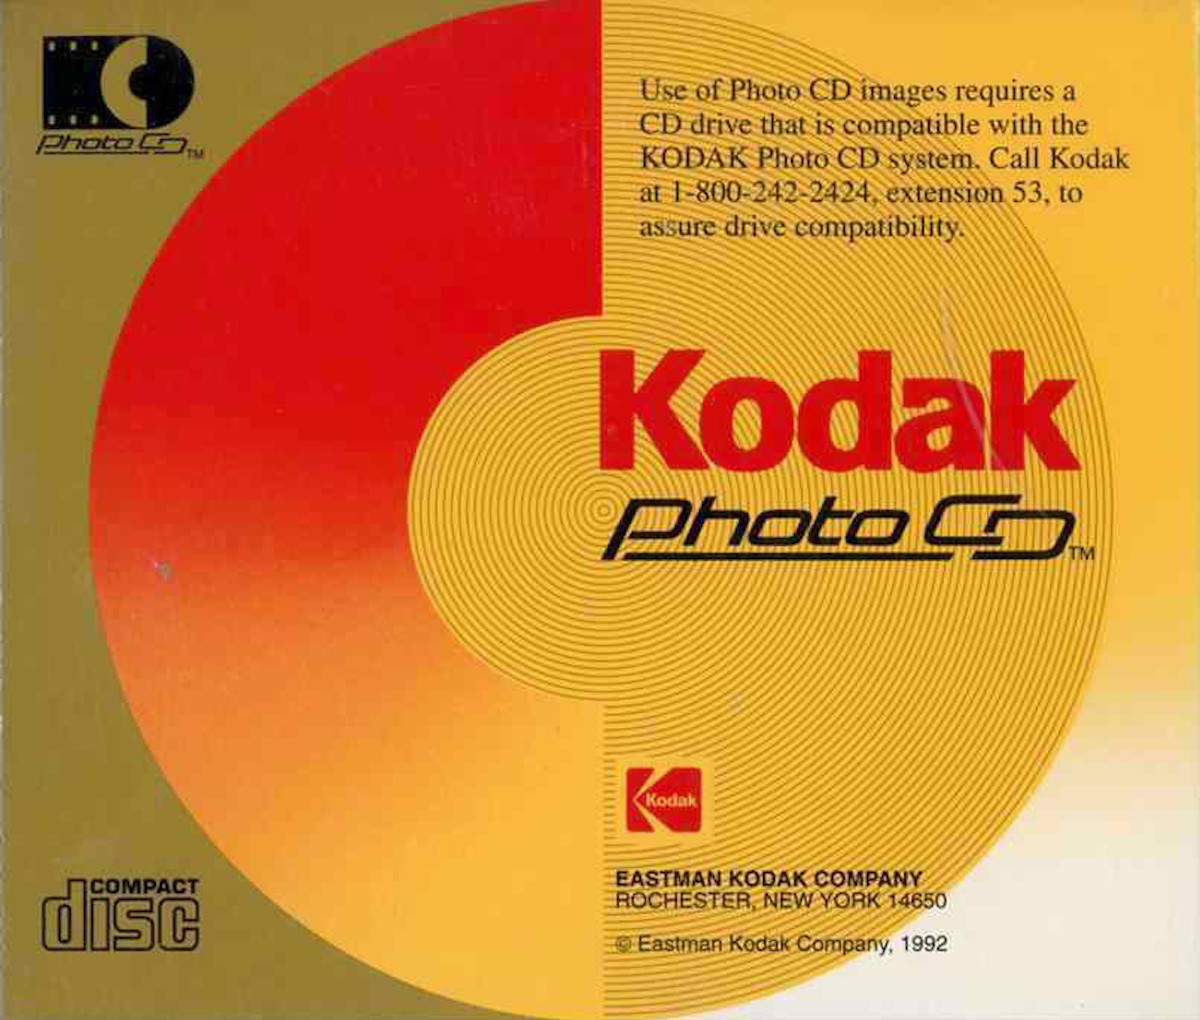 Backside of the CD jewel case was alway this Kodak PhotoCD design